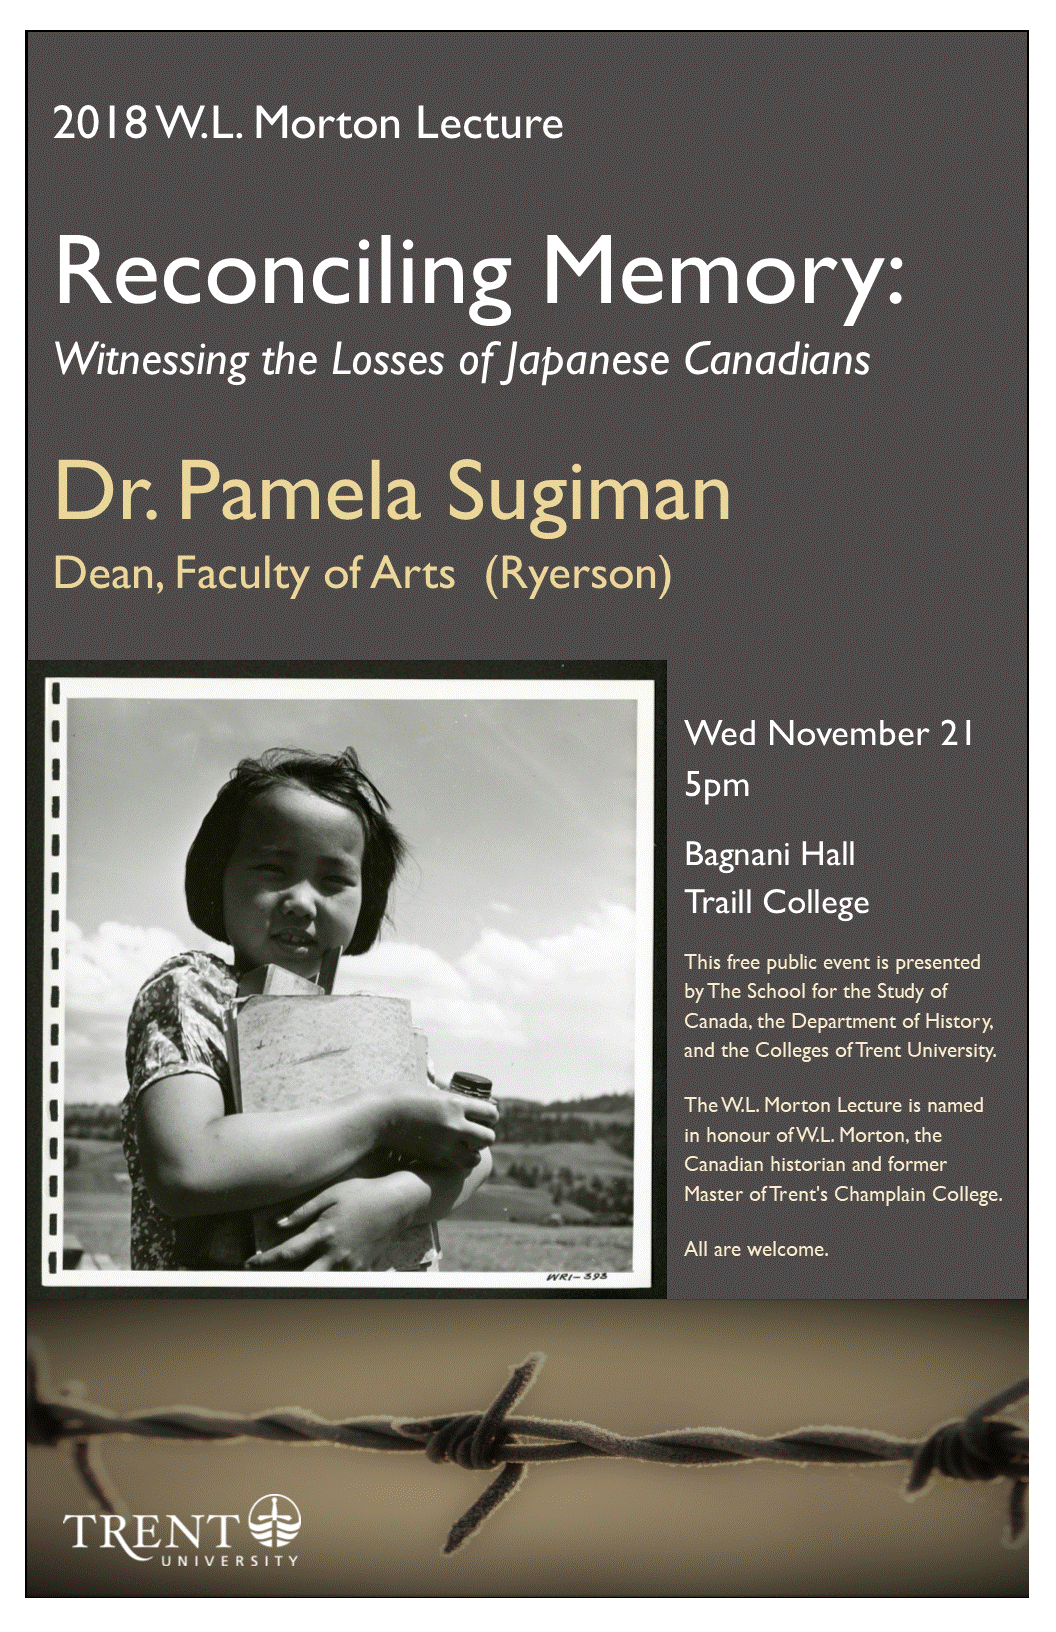 2018 W.L. Morton Lecture, Dr. Pamela Sugiman Nov 21, 2018 5pm